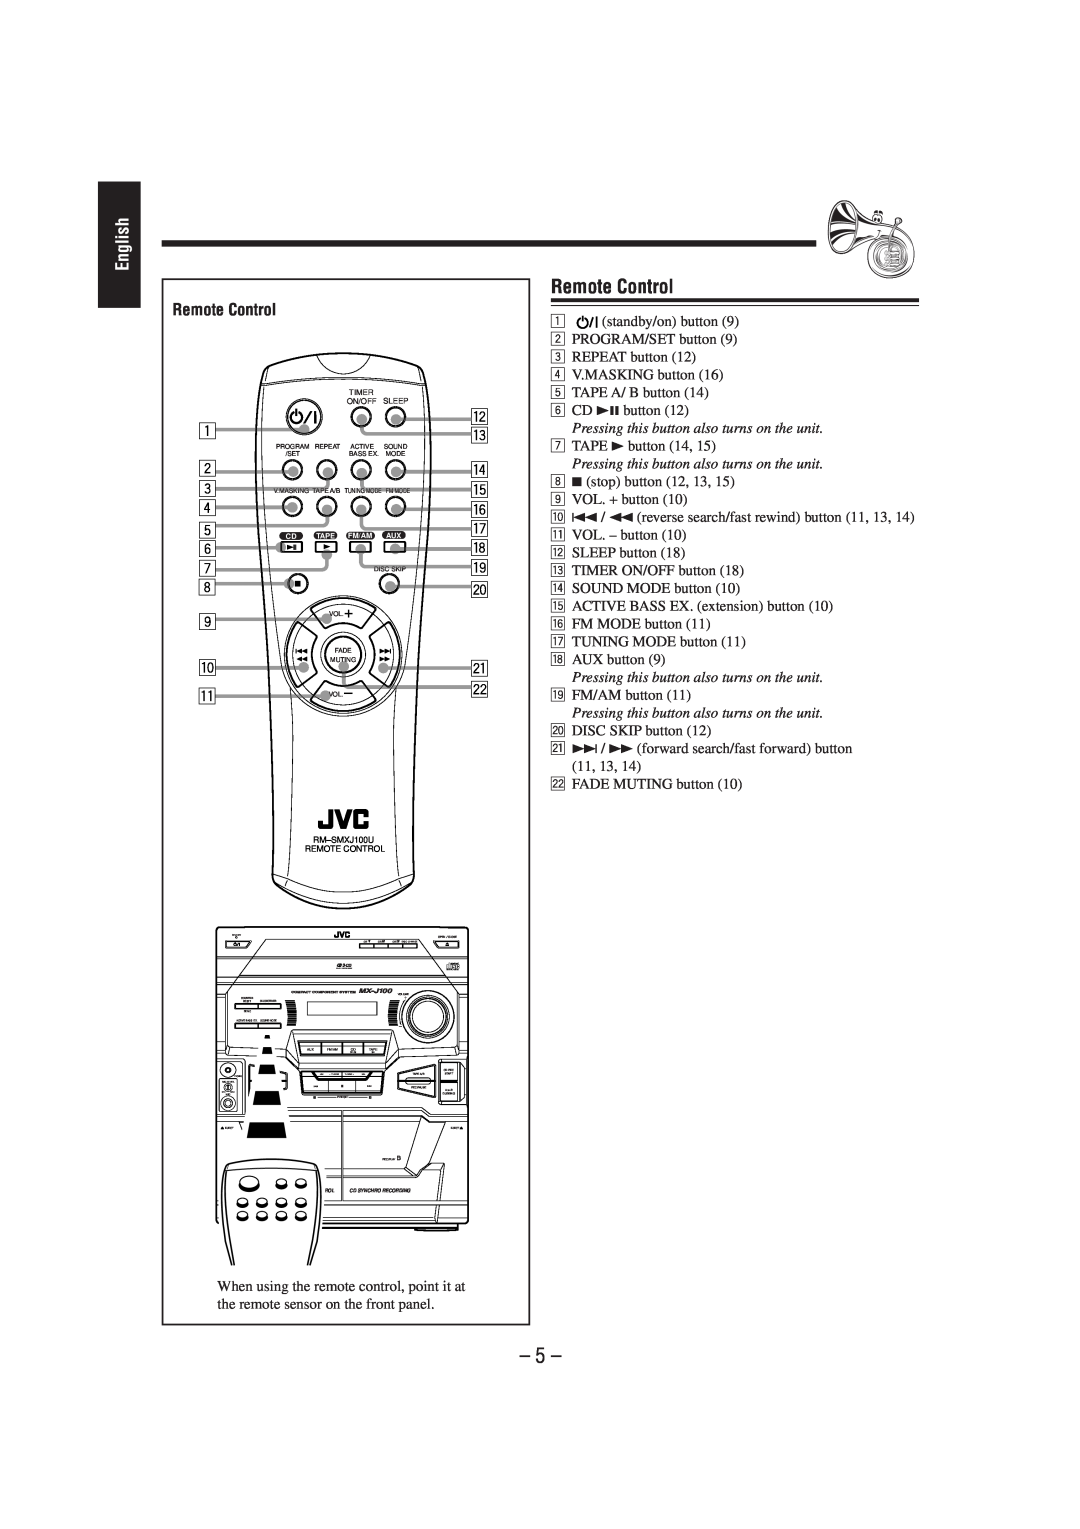 JVC MX-J100 manual Remote Control, English 